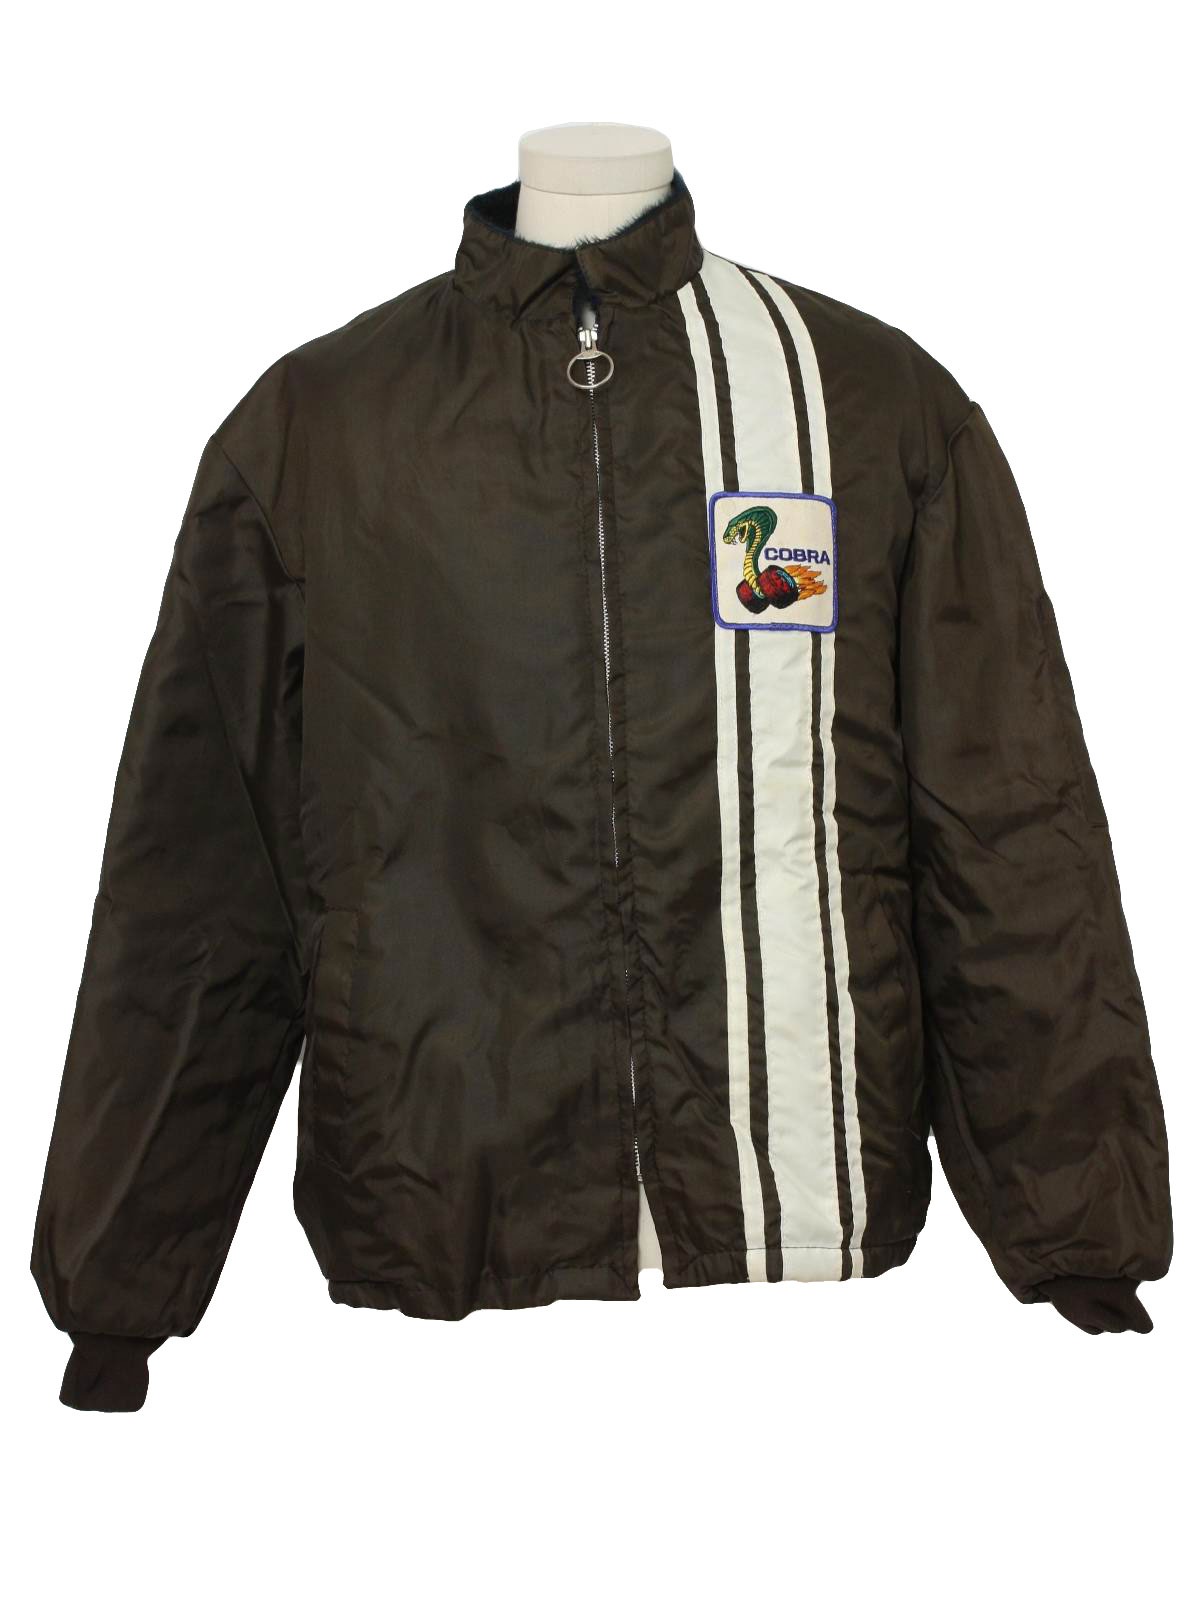 Vintage ford cobra mustang racing jacket